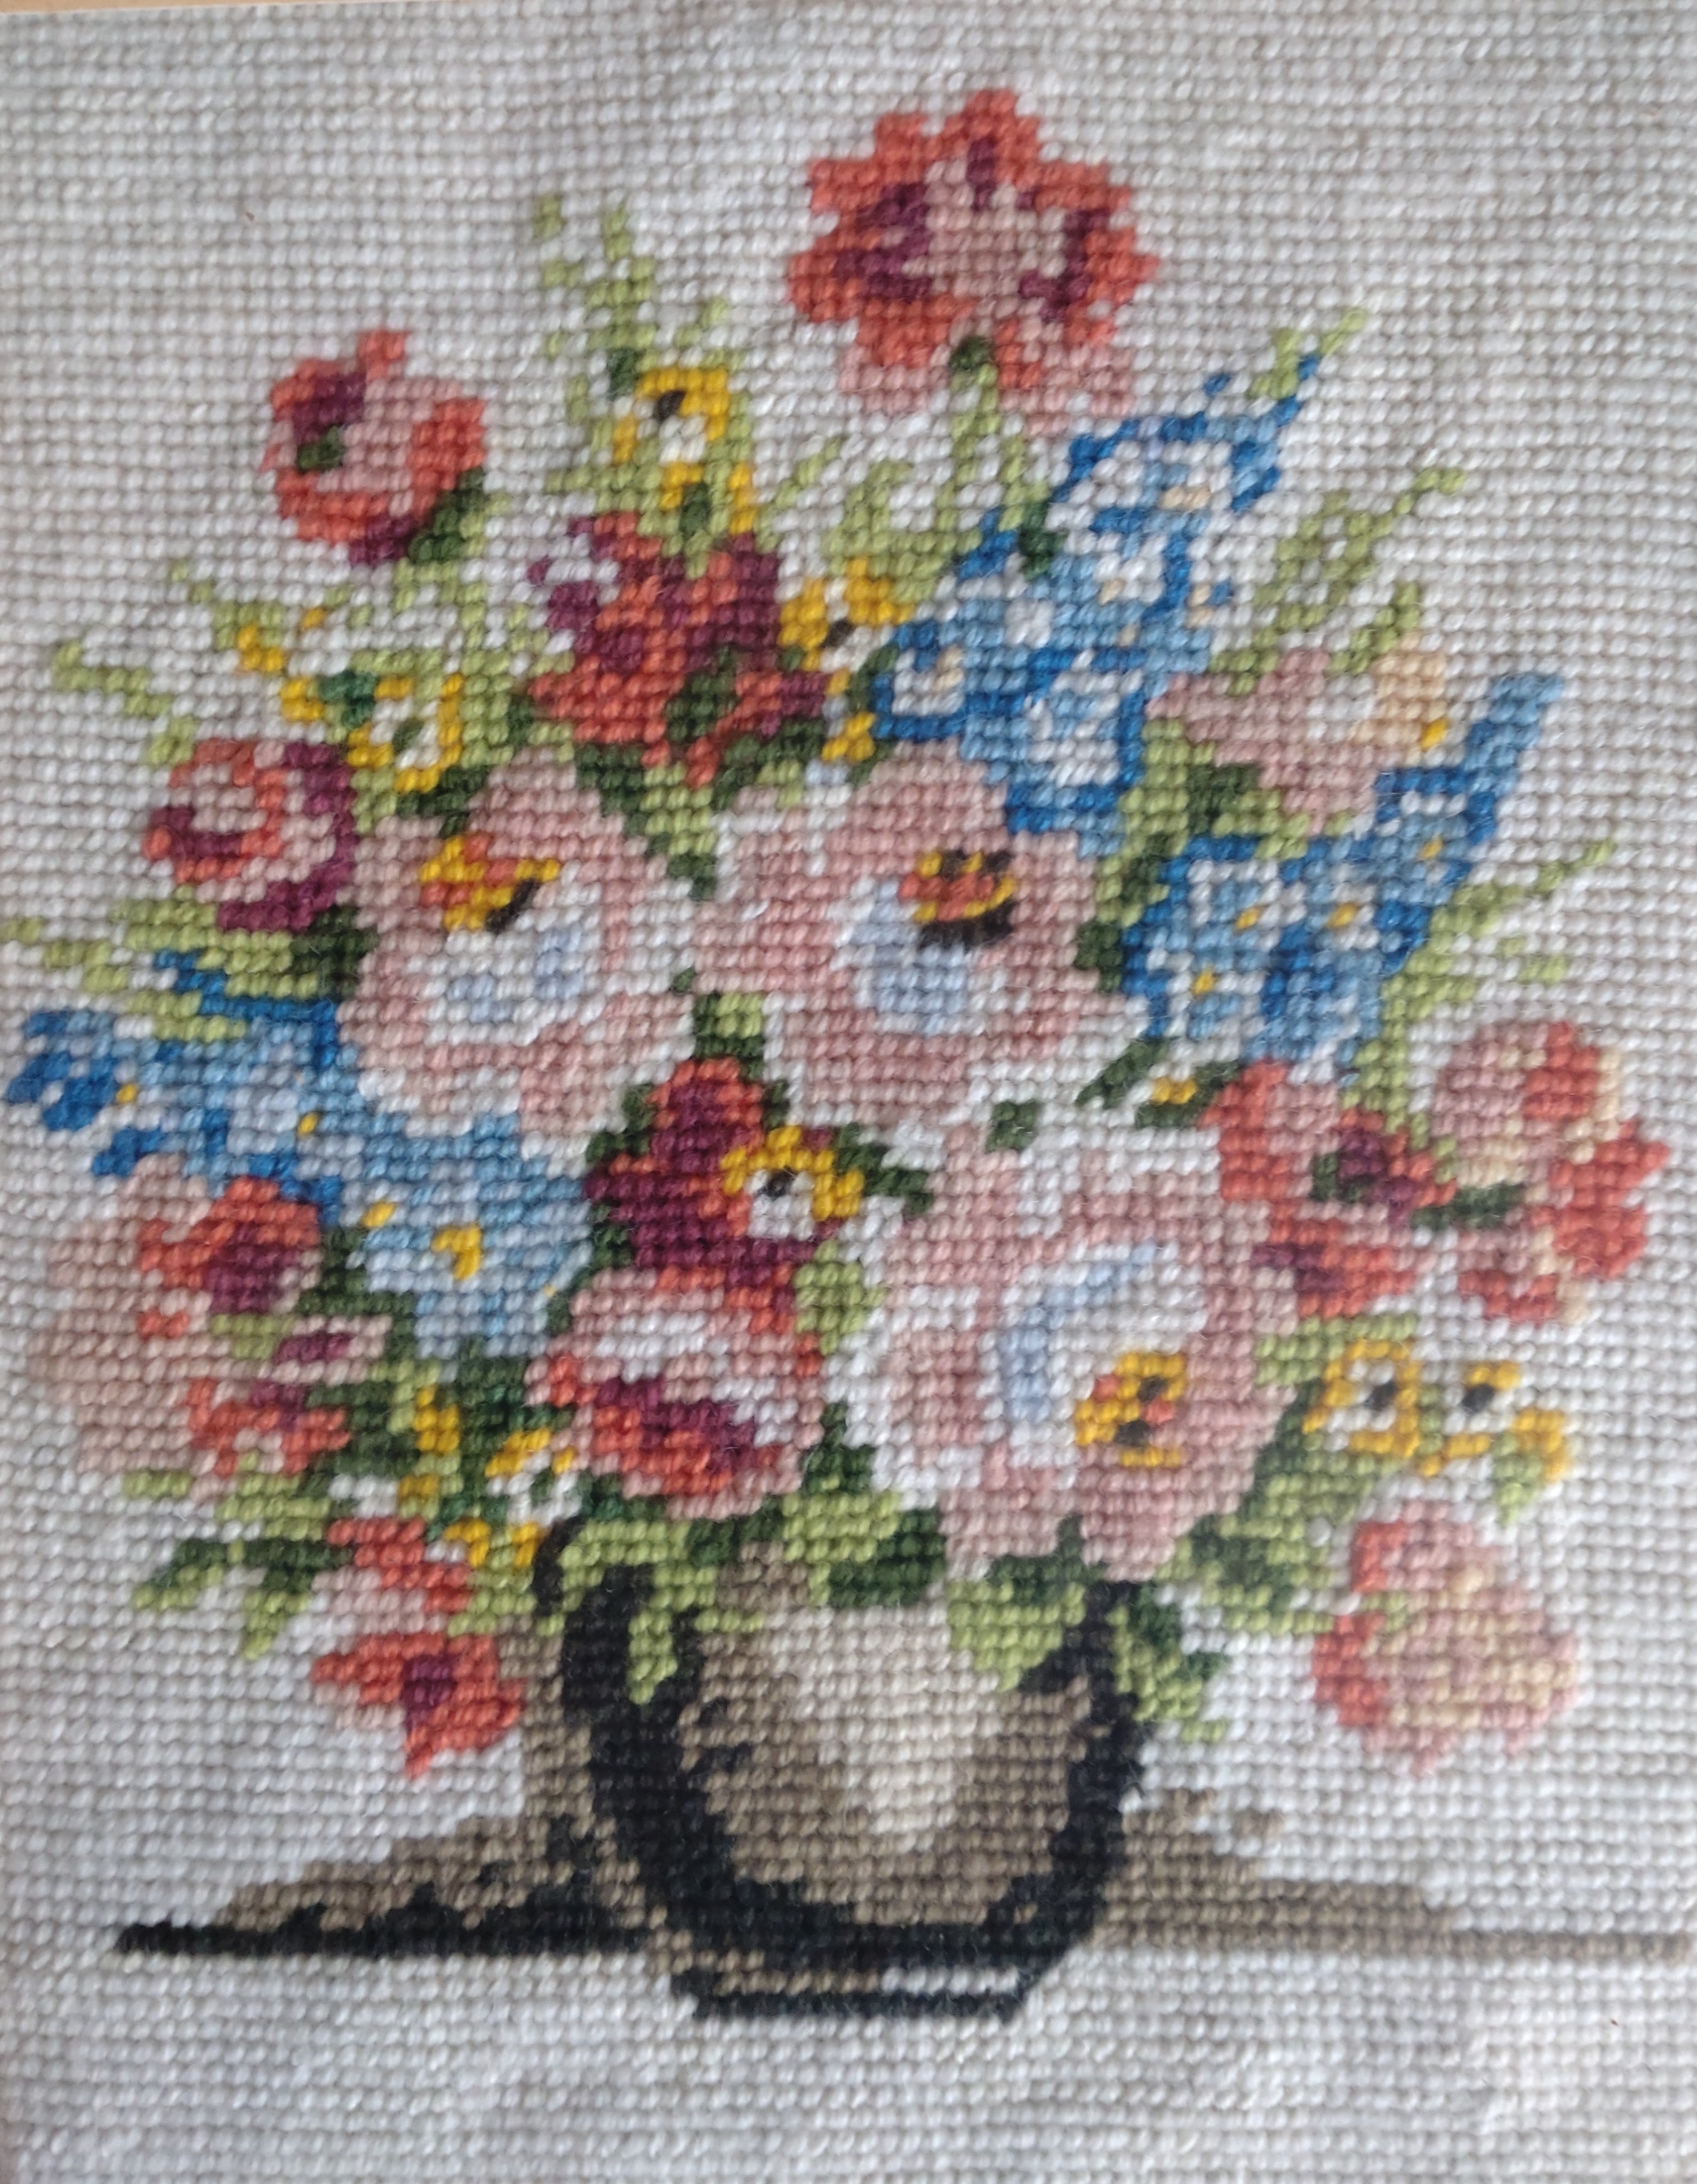 Framed embroidery still life flowers 24cm x 19cm